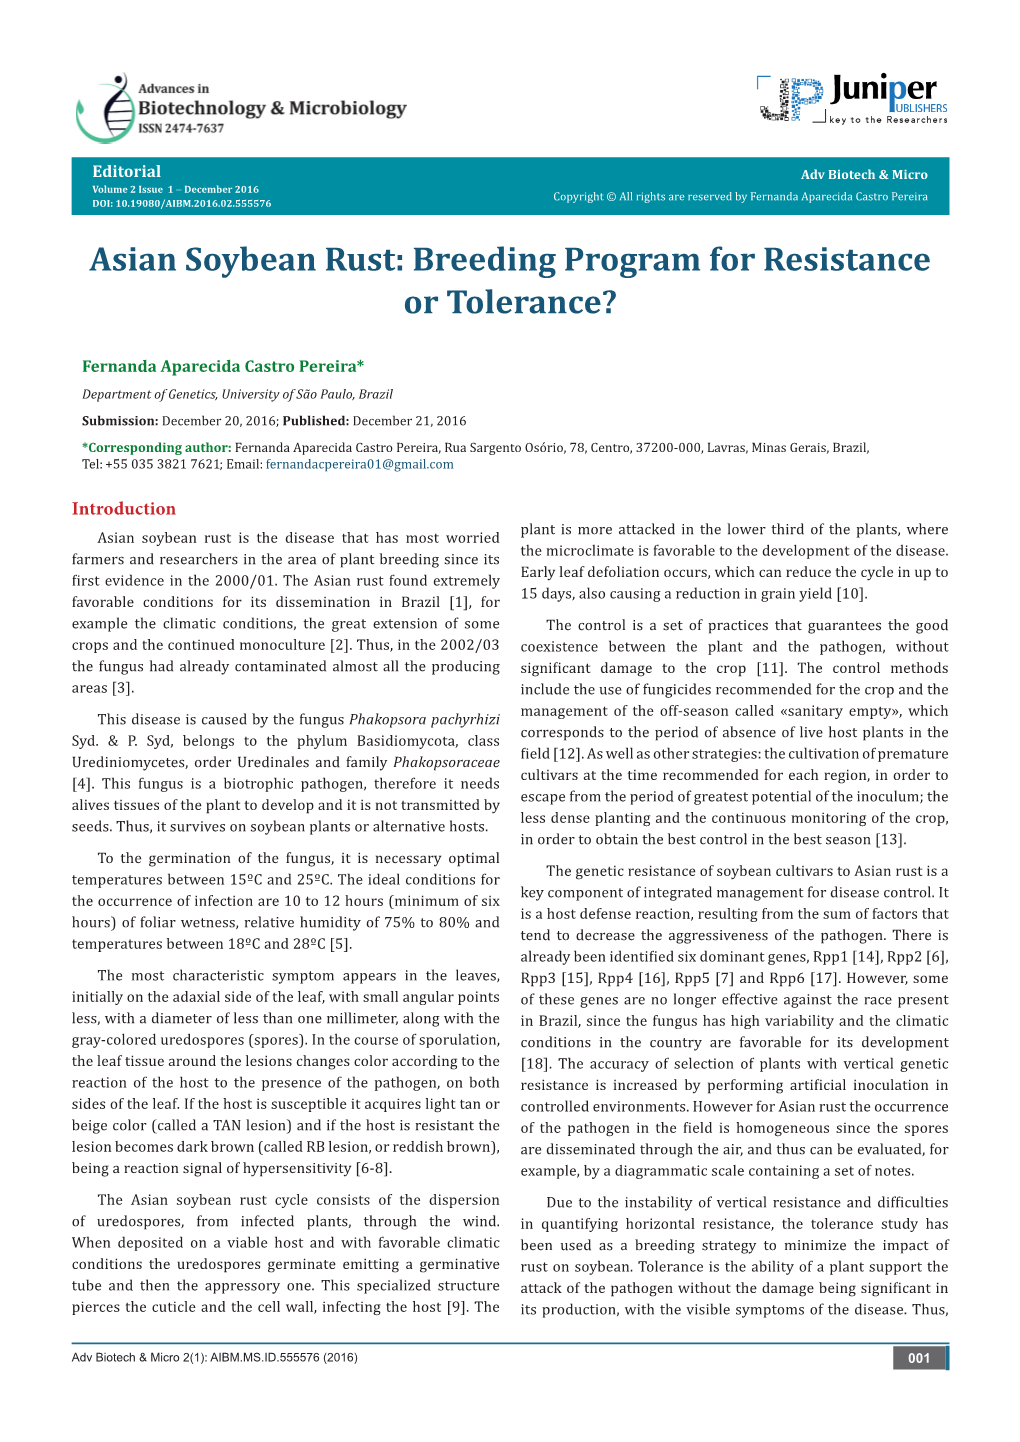 Asian Soybean Rust: Breeding Program for Resistance Or Tolerance?